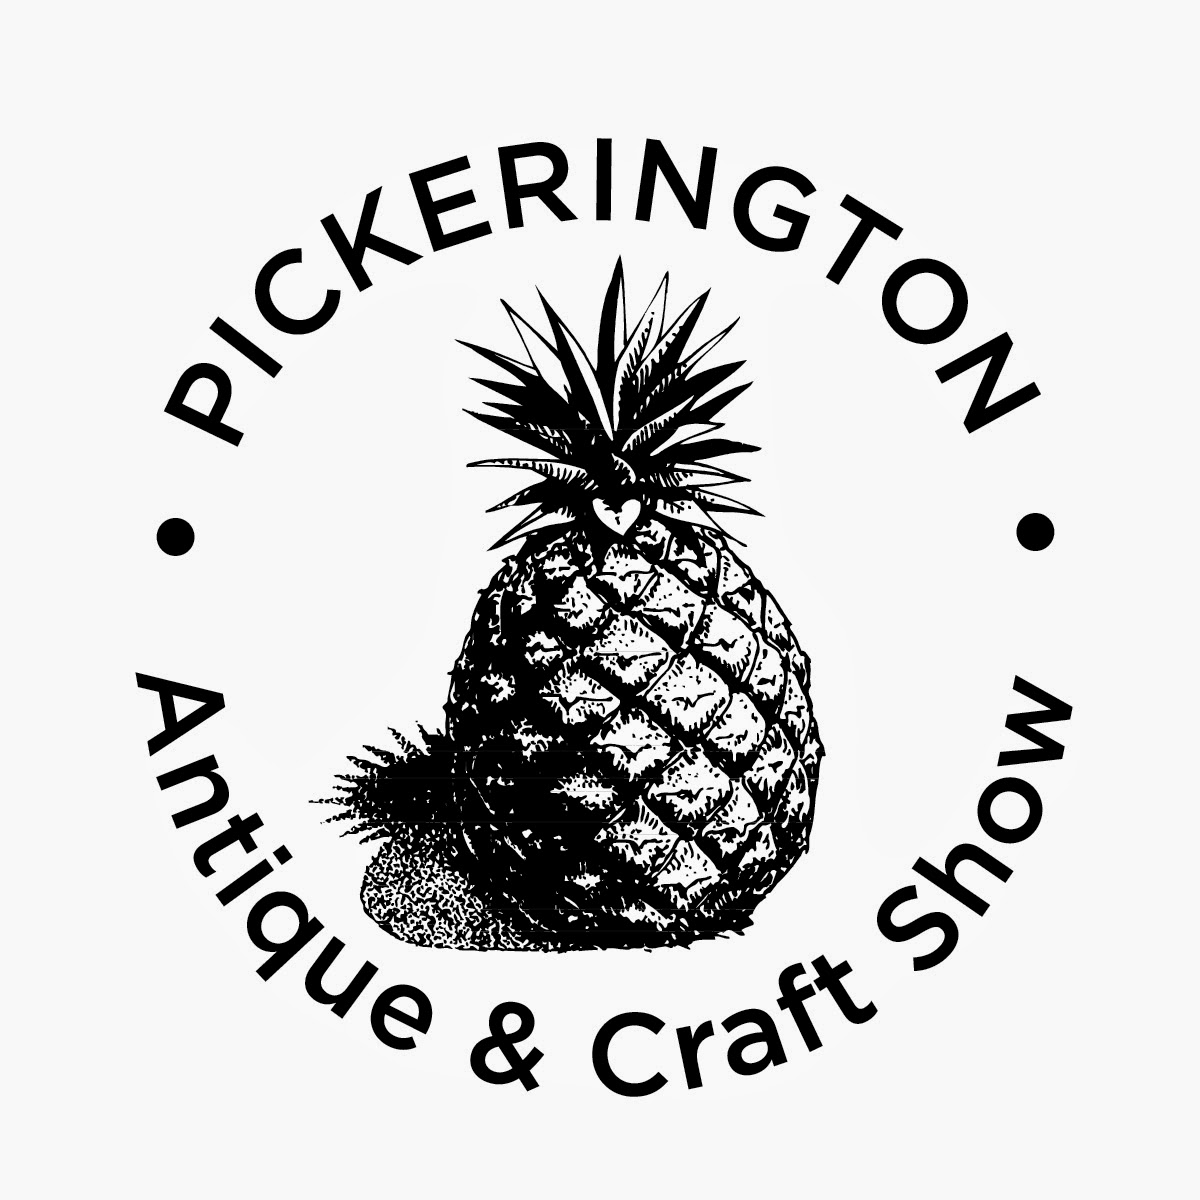 A Pickerington Tradition since 1984